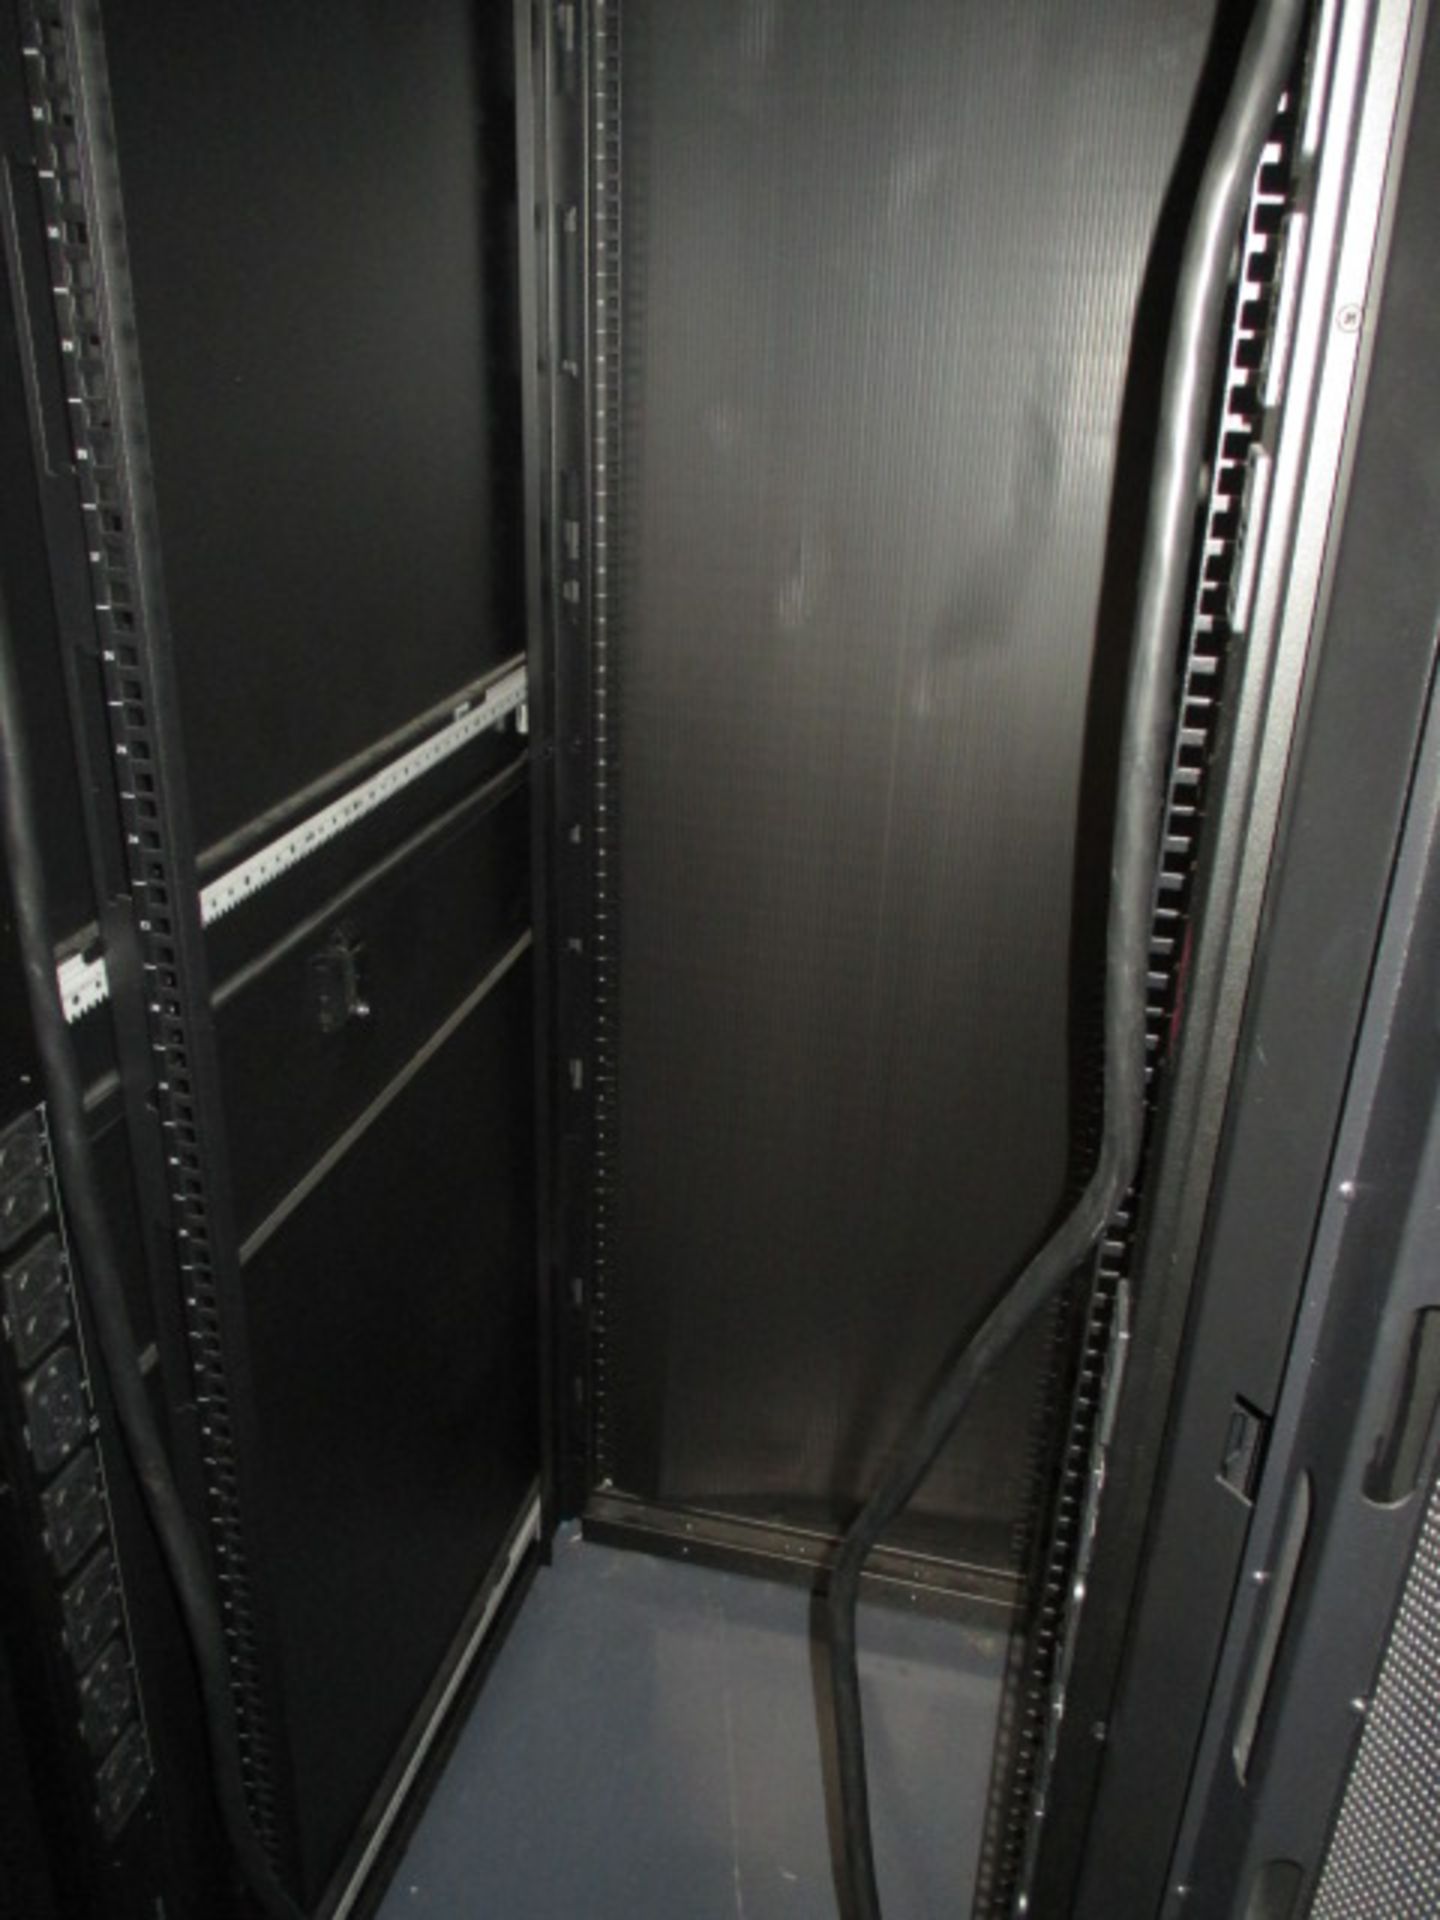 Schneider Server Enclosures - Image 2 of 3